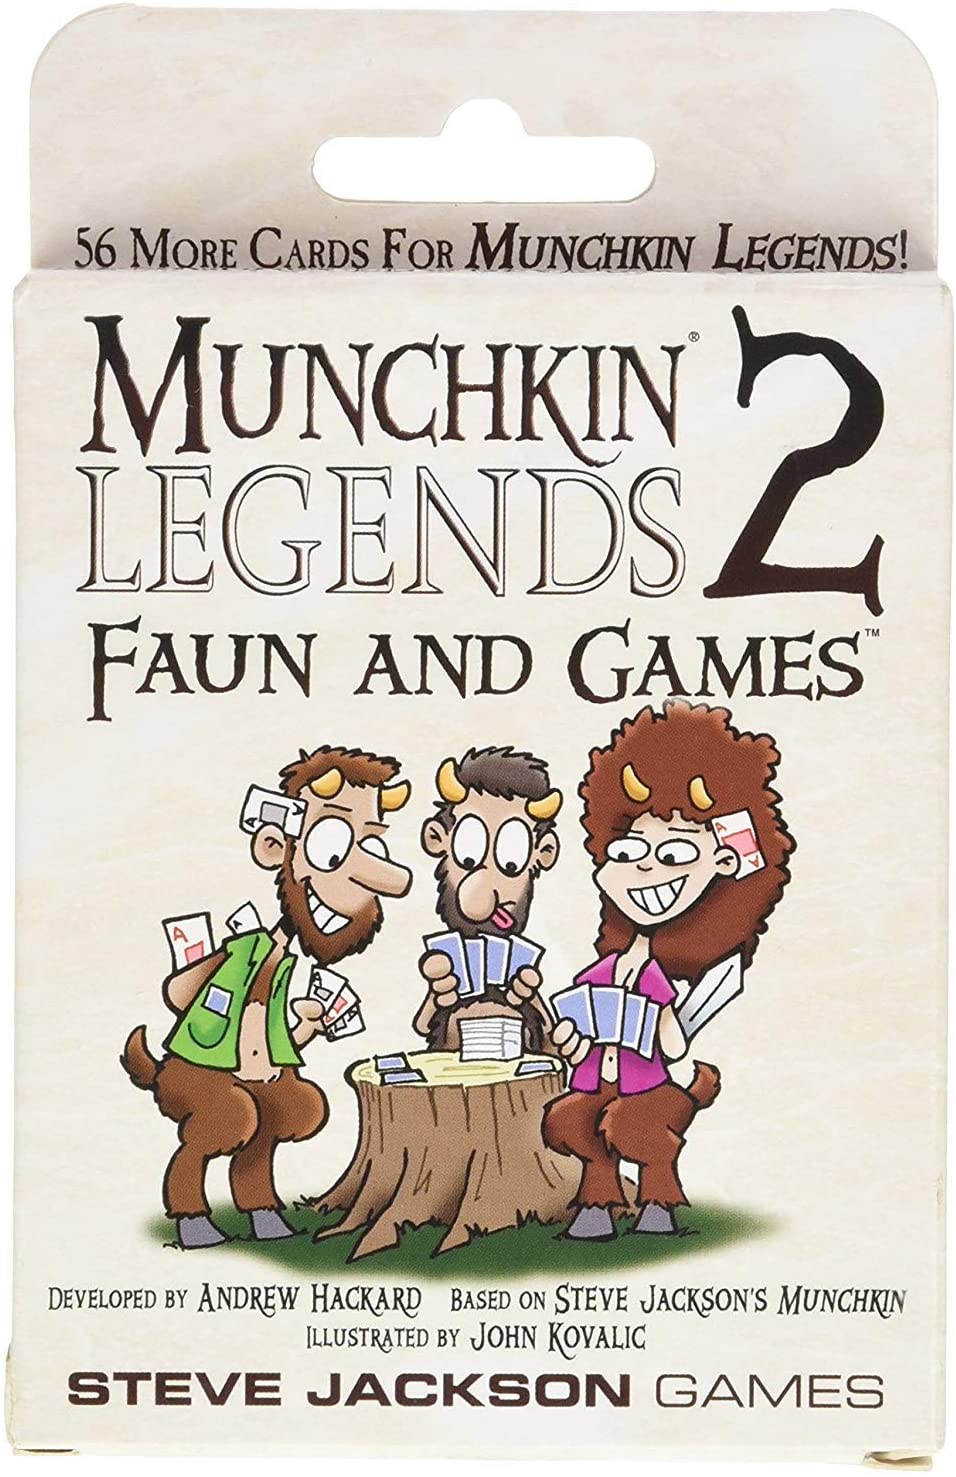 Munchkin Legends 2: Faun and Games